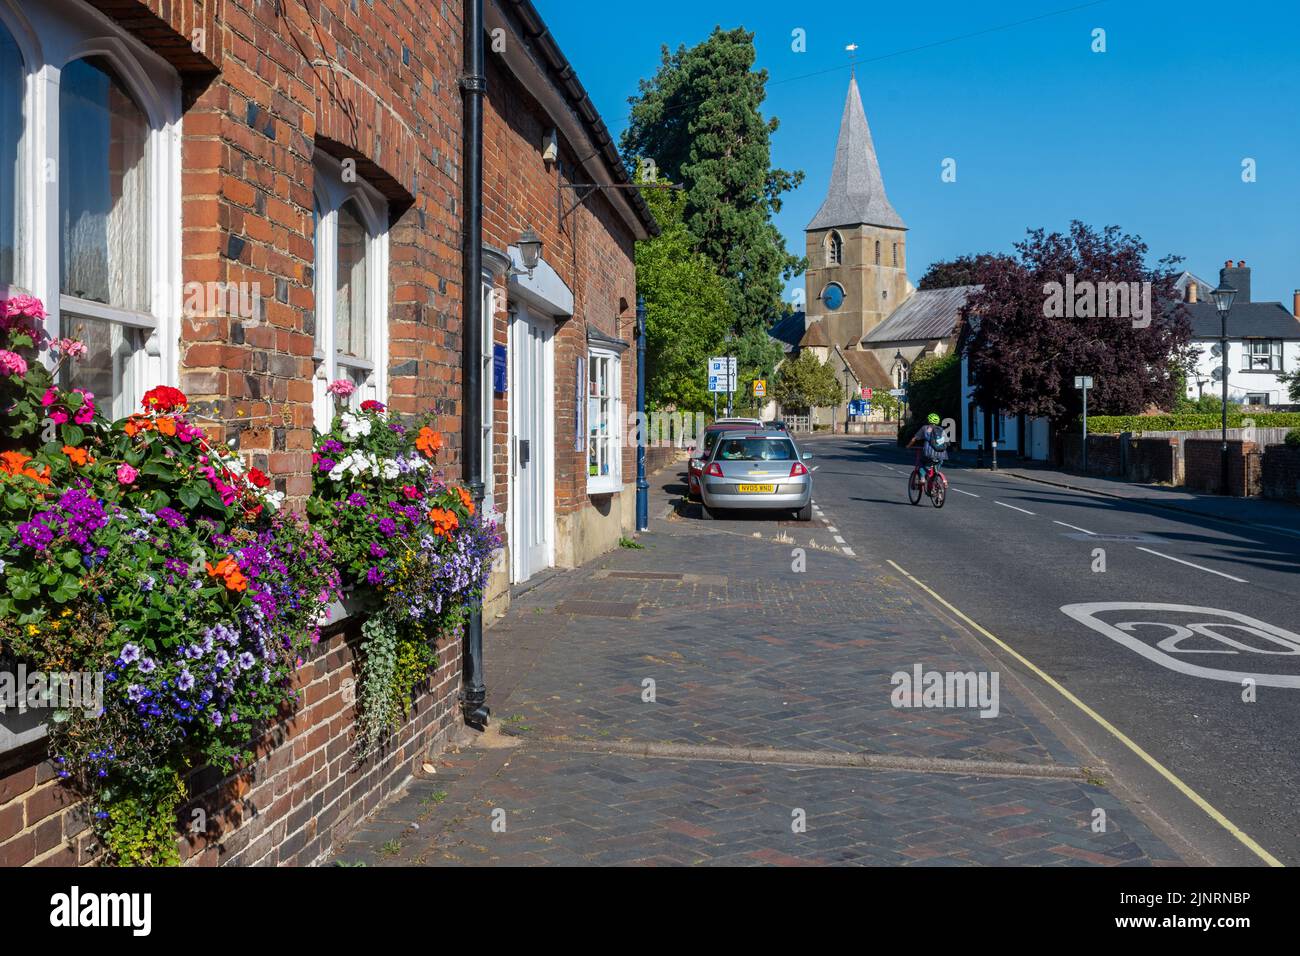 Church Street en Alton, Hampshire, Inglaterra, Reino Unido, durante el verano con vistas a la iglesia de San Lorenzo Foto de stock